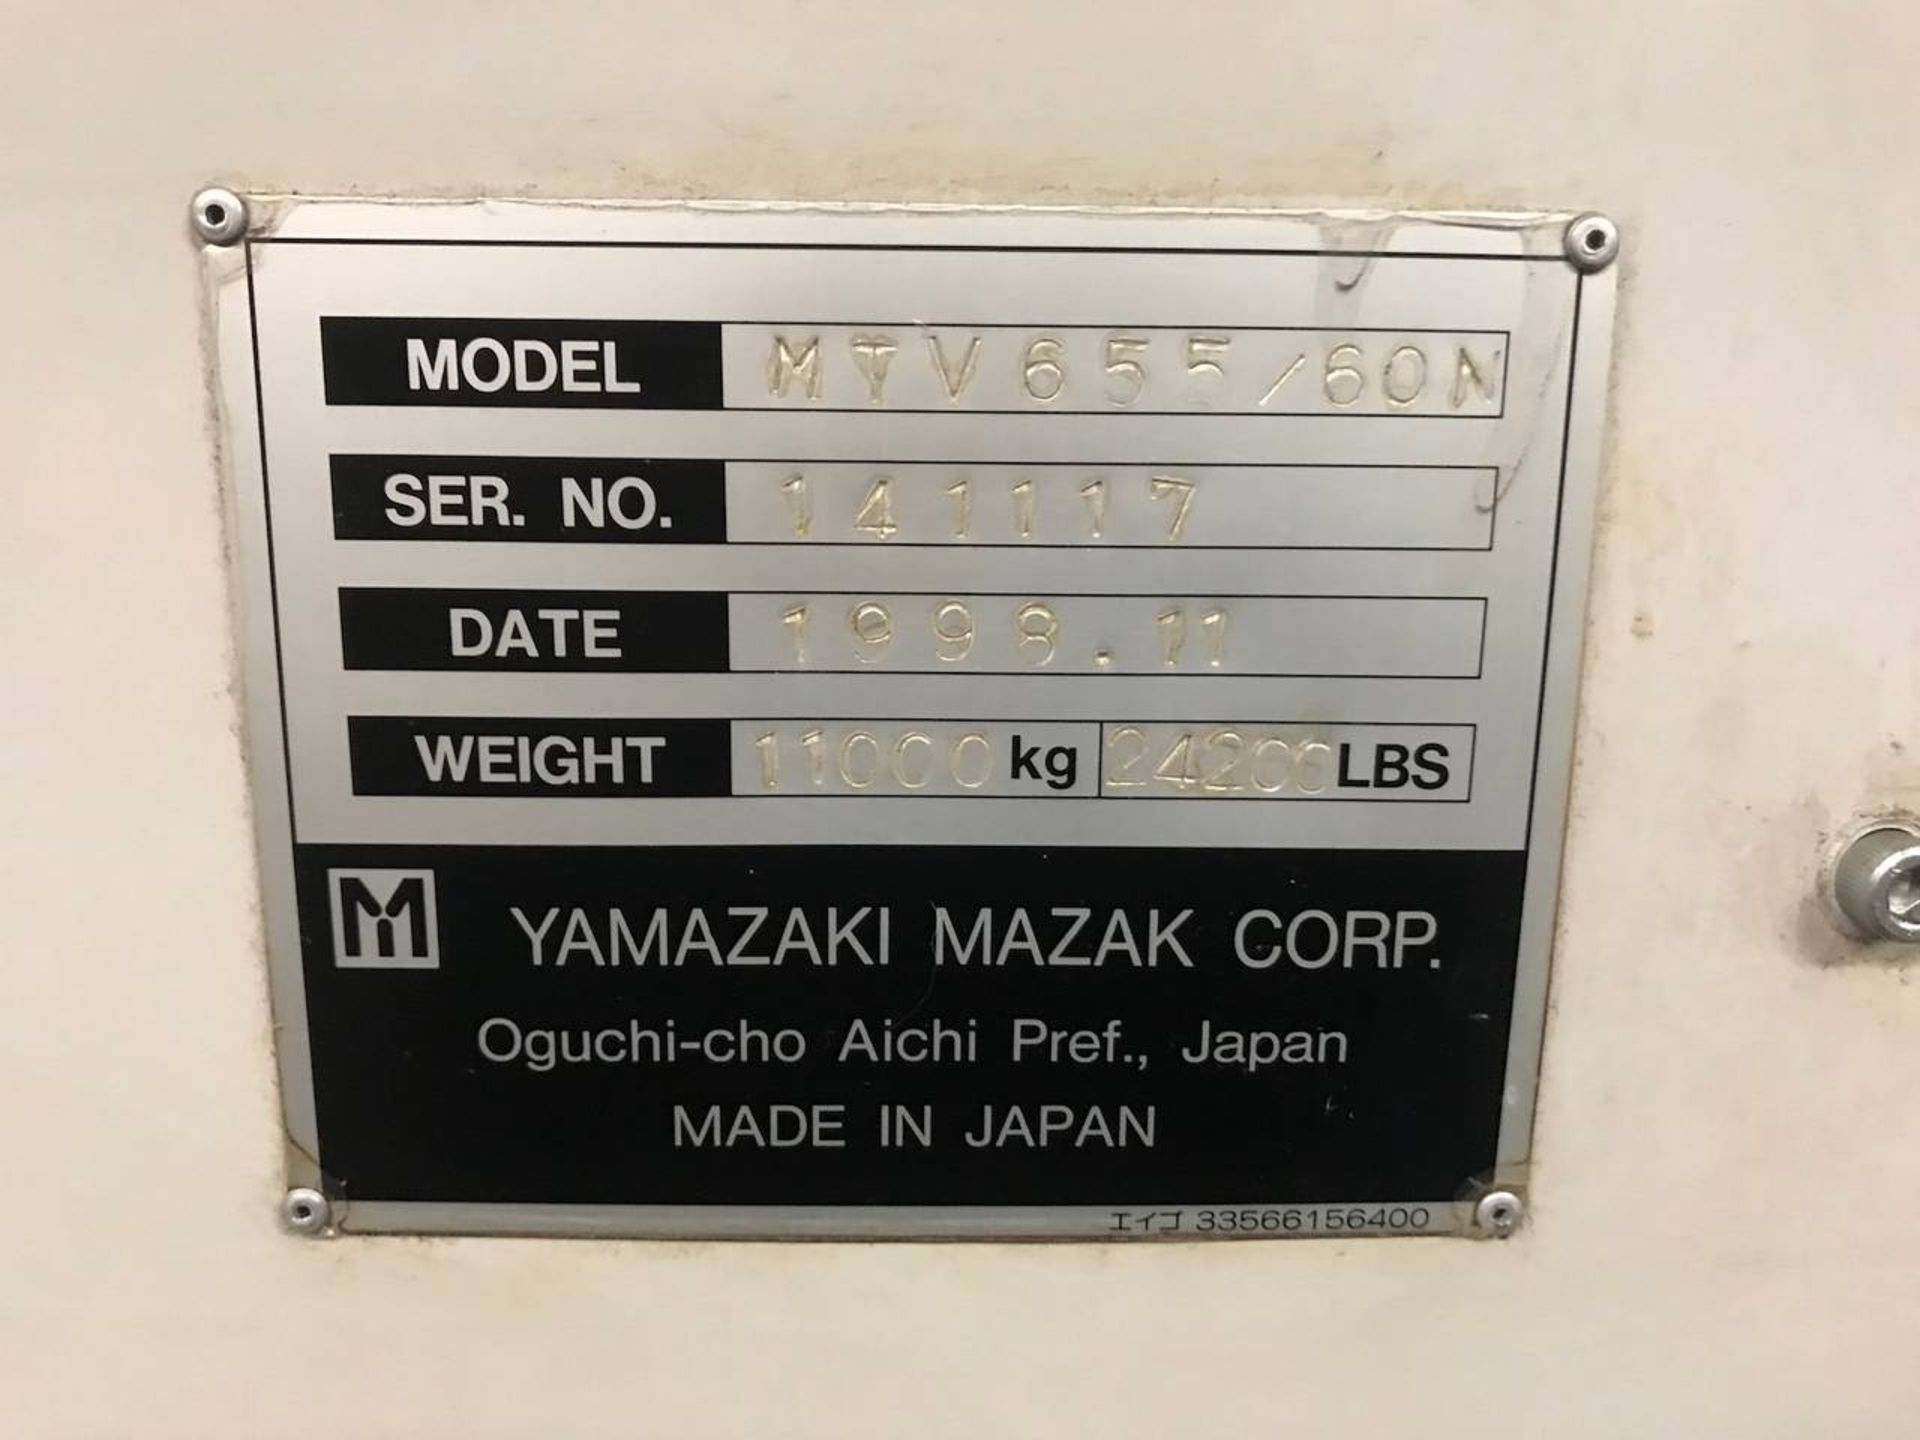 MAZAK MTV-655/60N CNC Vertical Machining Center - Image 8 of 13